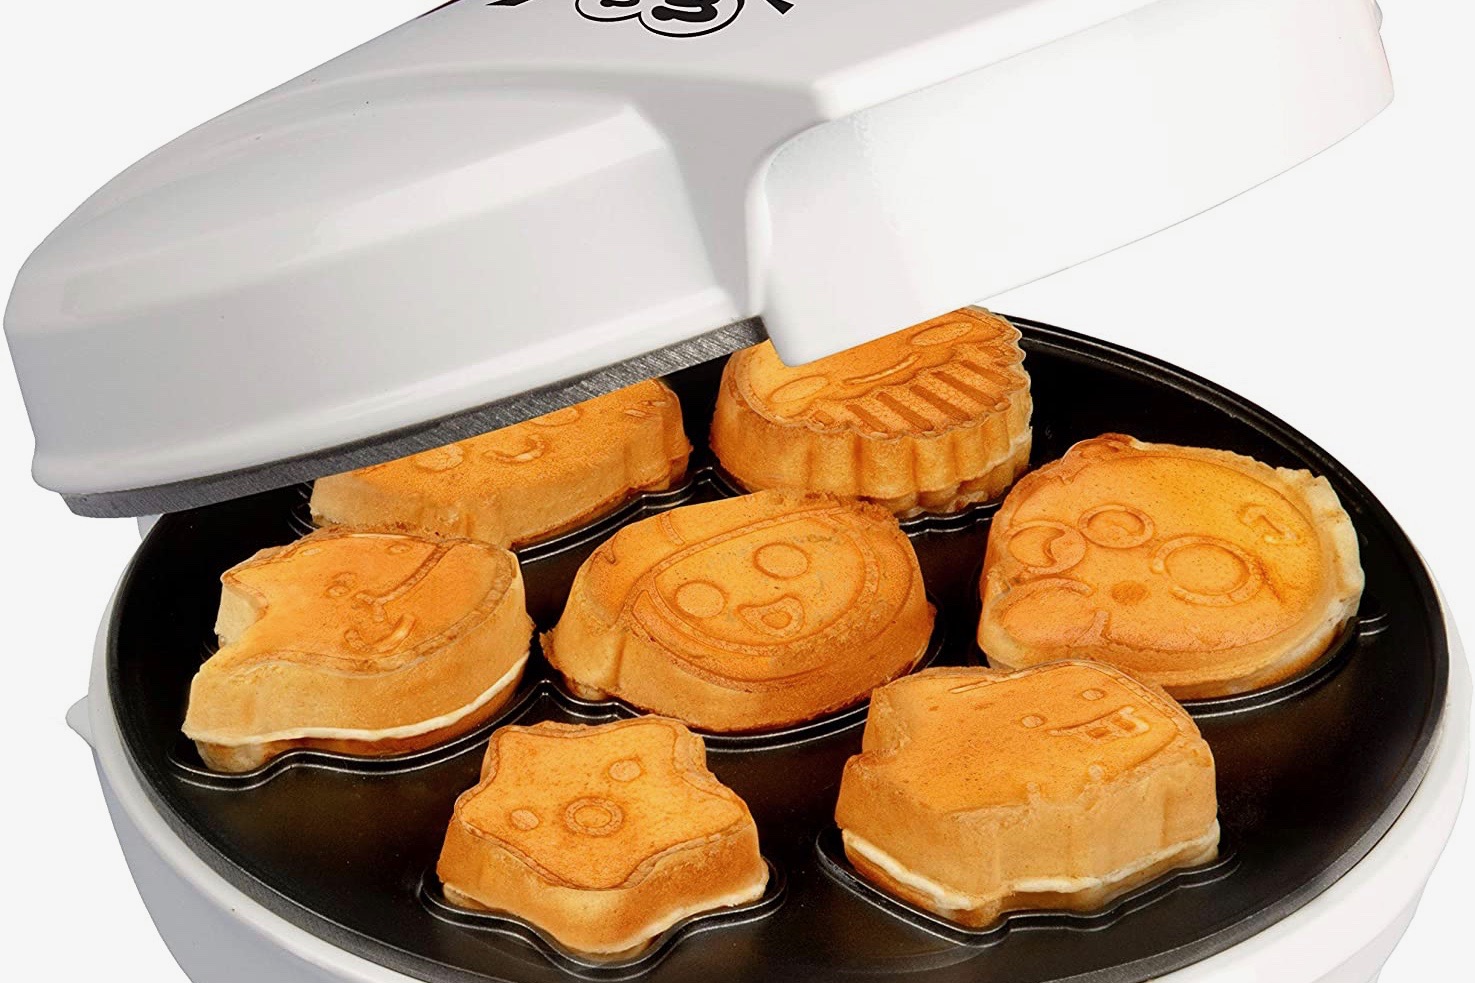 https://www.digitaltrends.com/wp-content/uploads//2020/11/sea-creature-waffle-maker-best-irons-1.jpg?fit=720%2C479&p=1